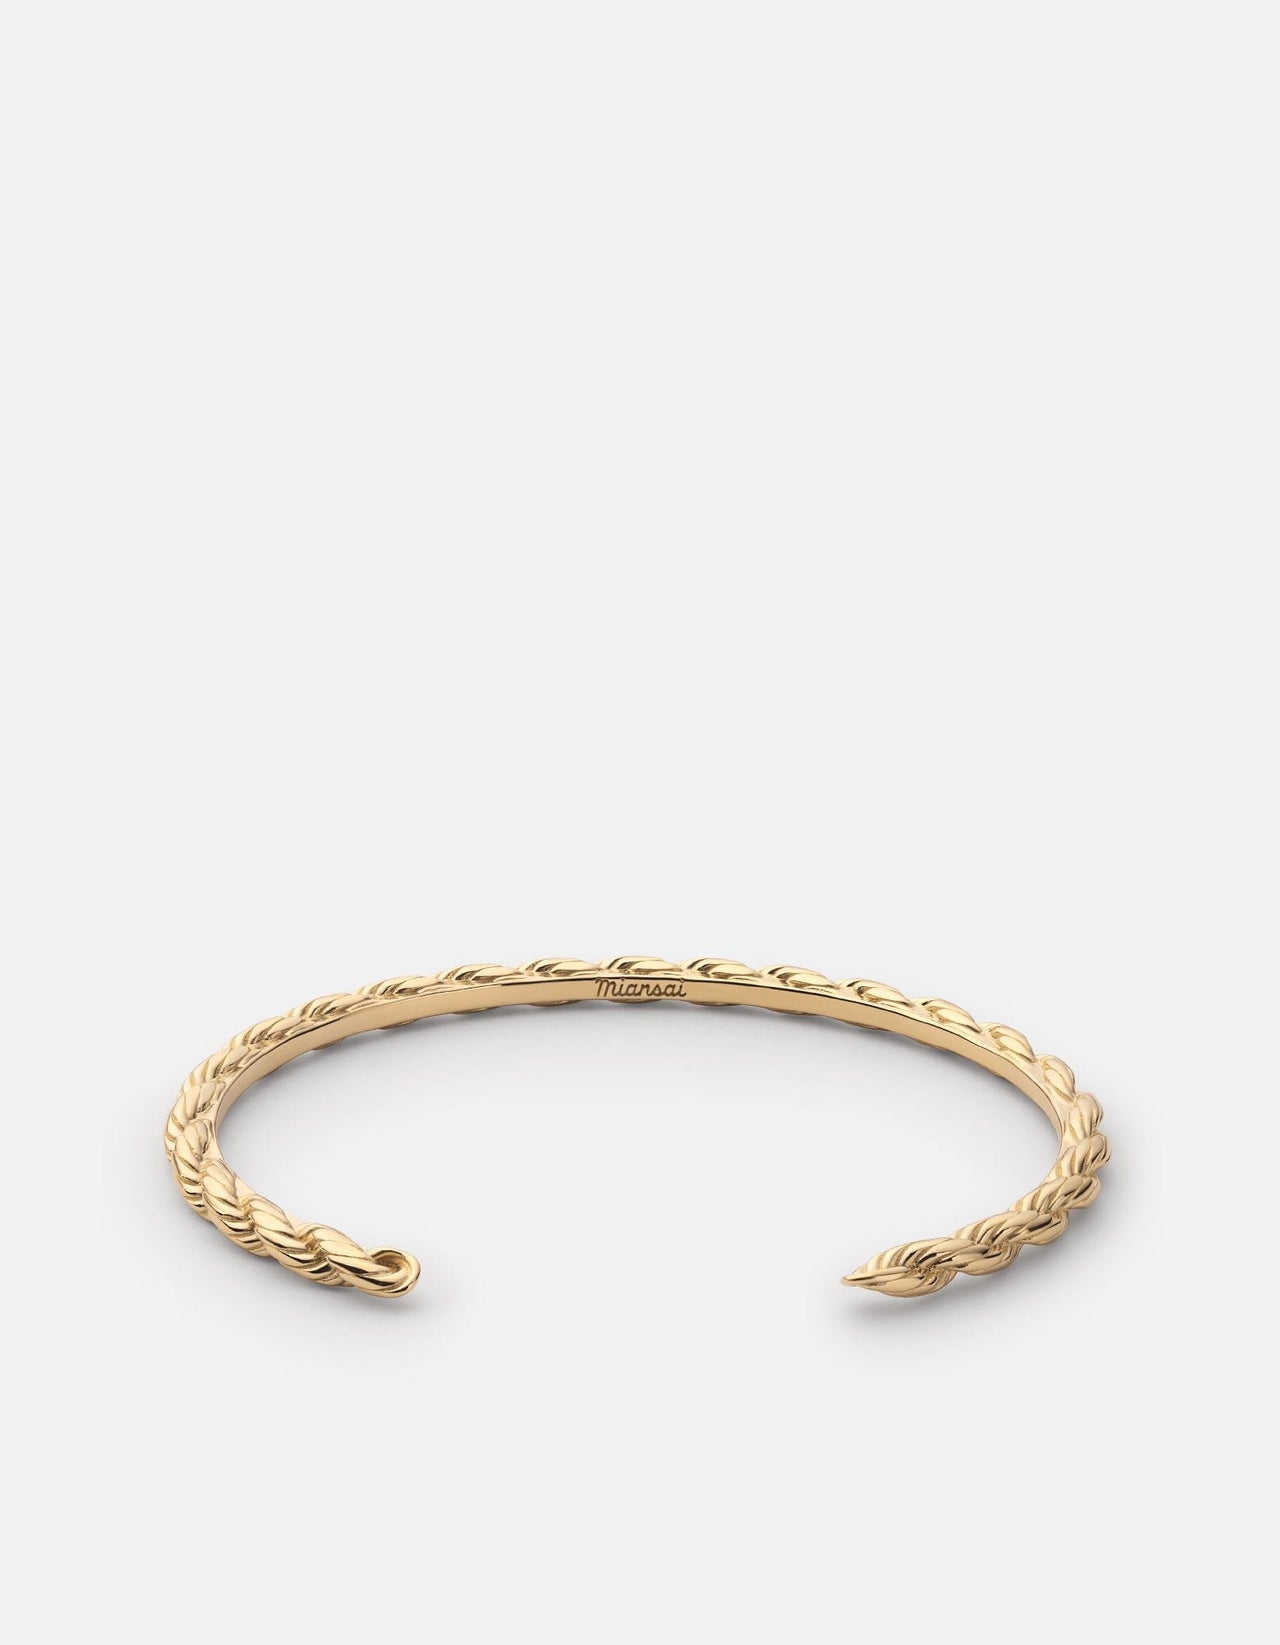 Rope Chain Cuff, Gold Vermeil | Women's Cuffs | Miansai